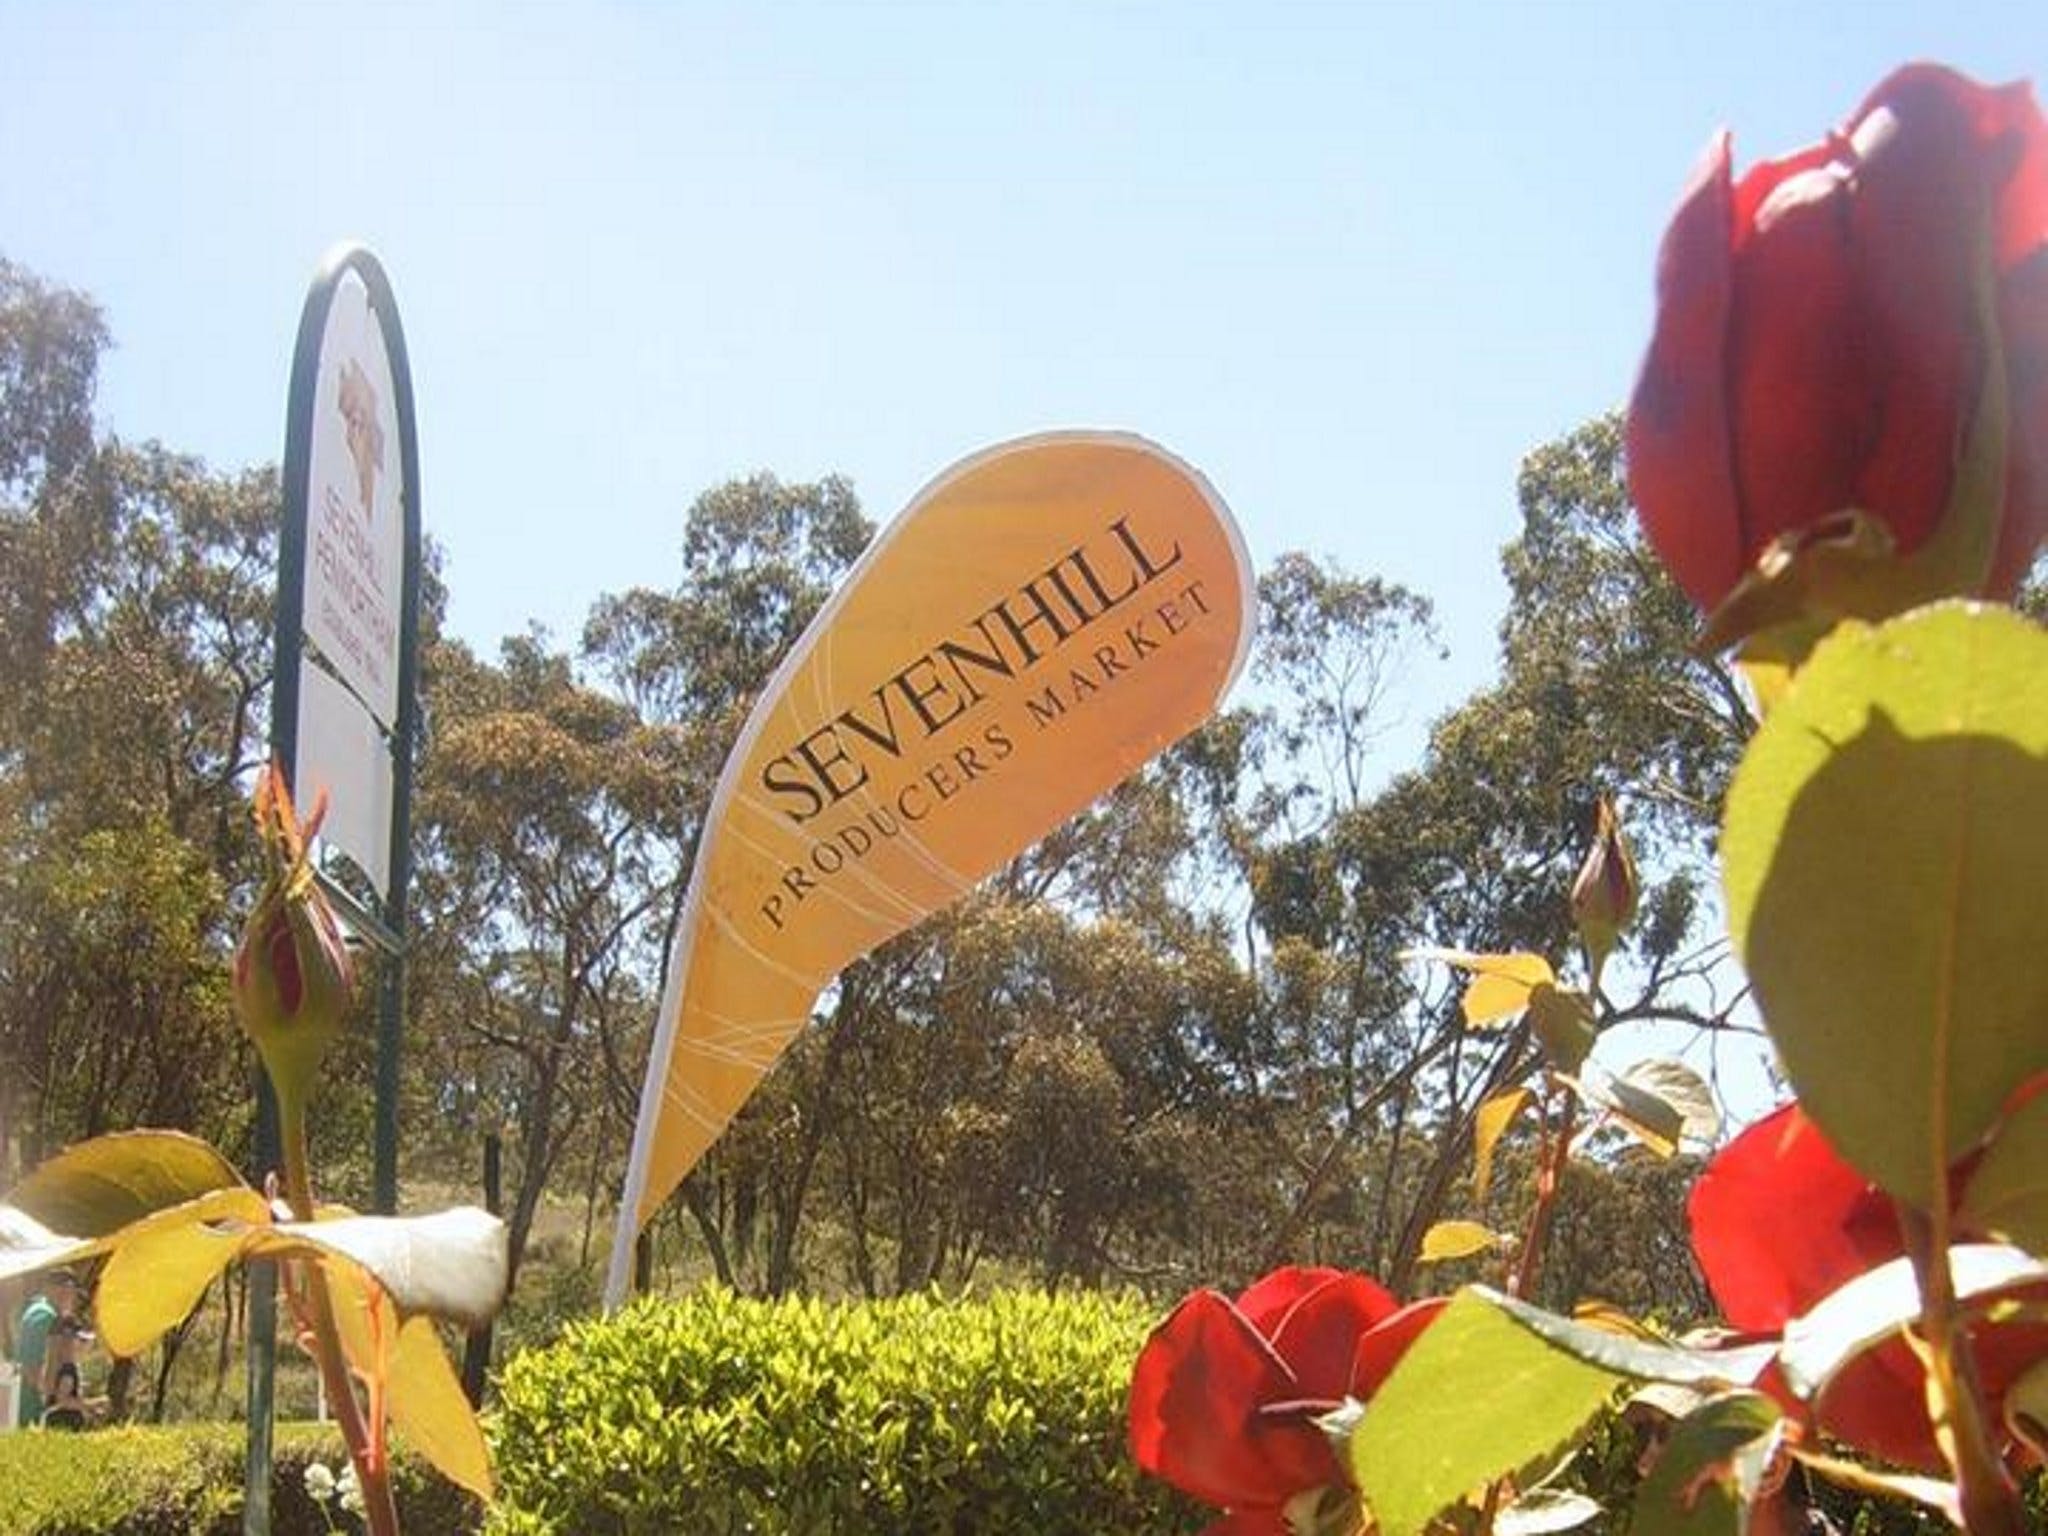 Sevenhill Producers Market - Tourism Adelaide